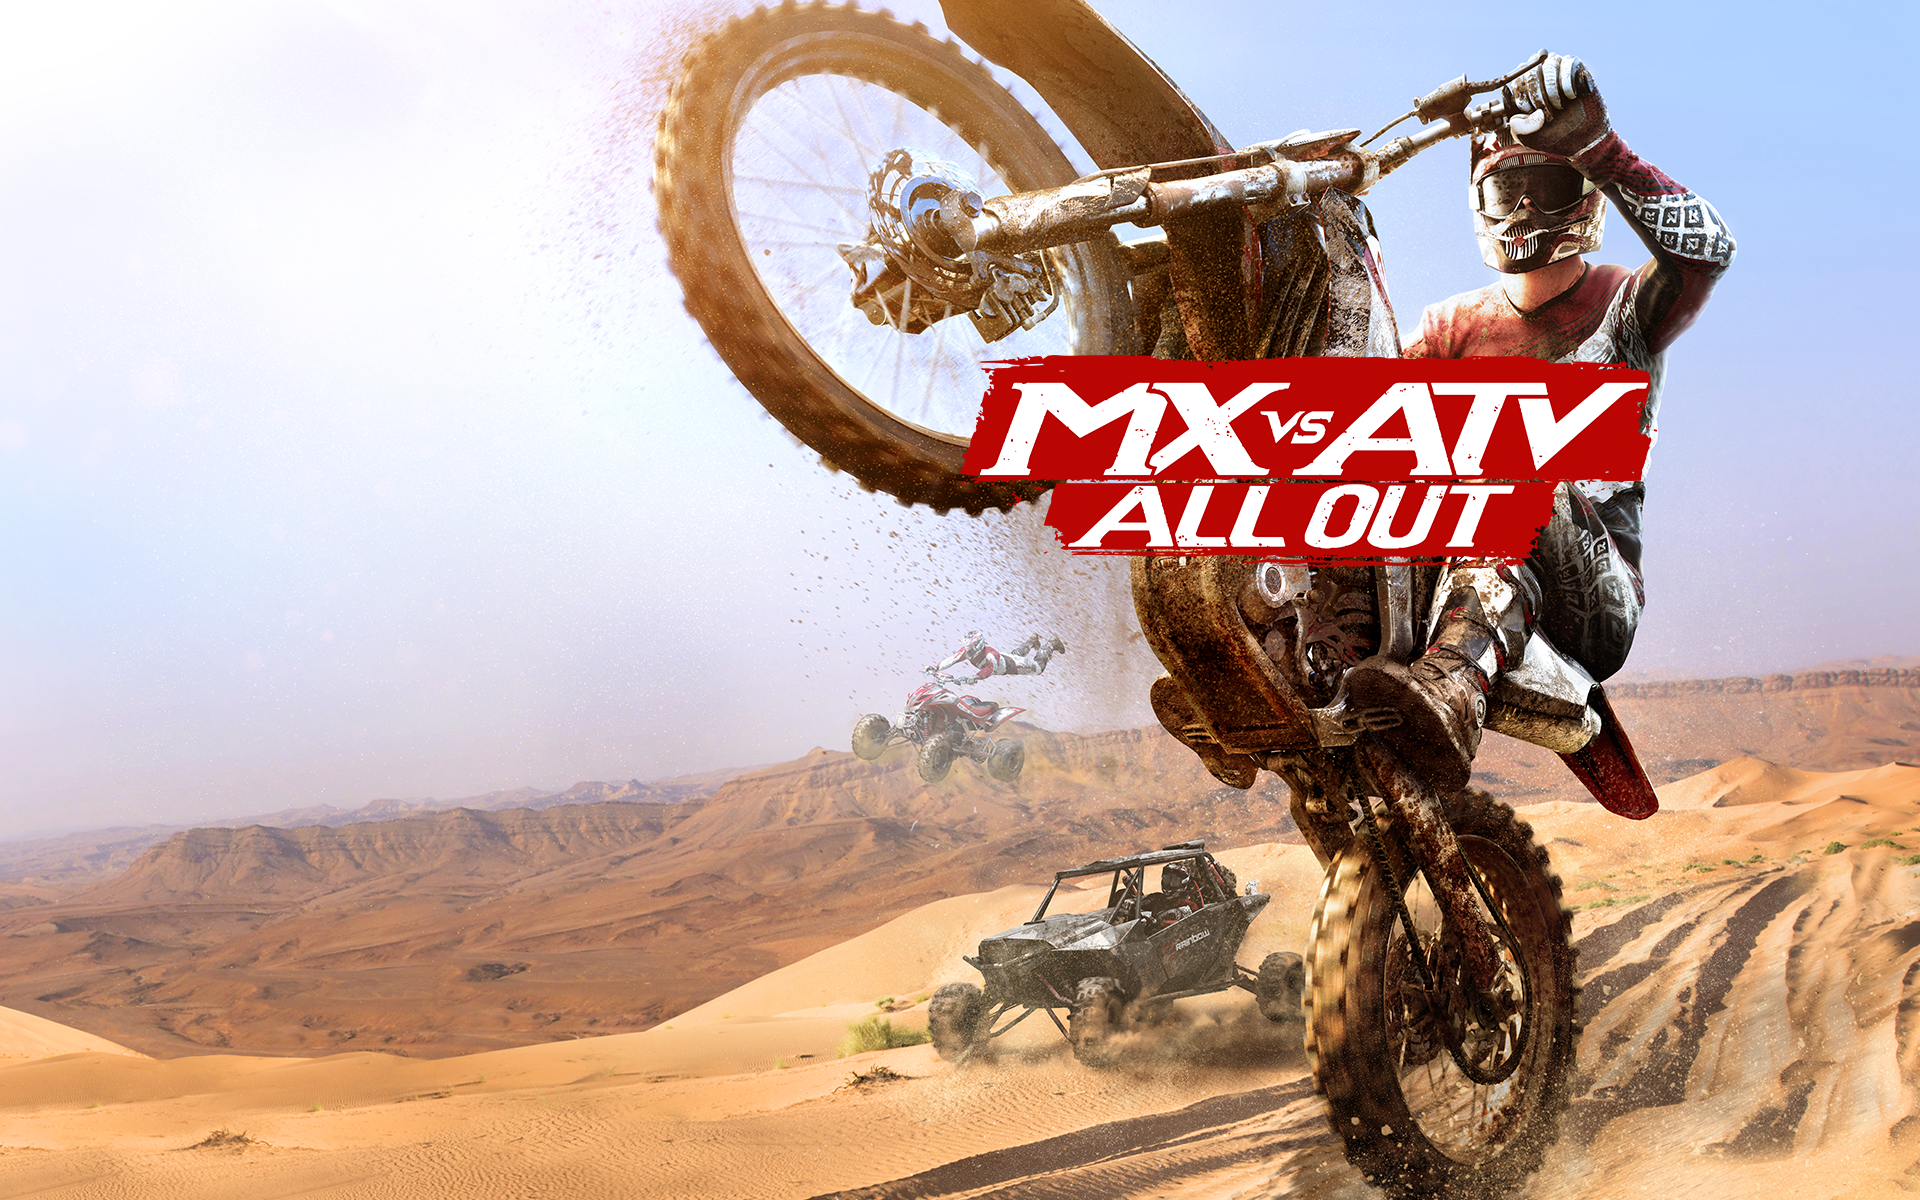 MX vs ATV All Out 